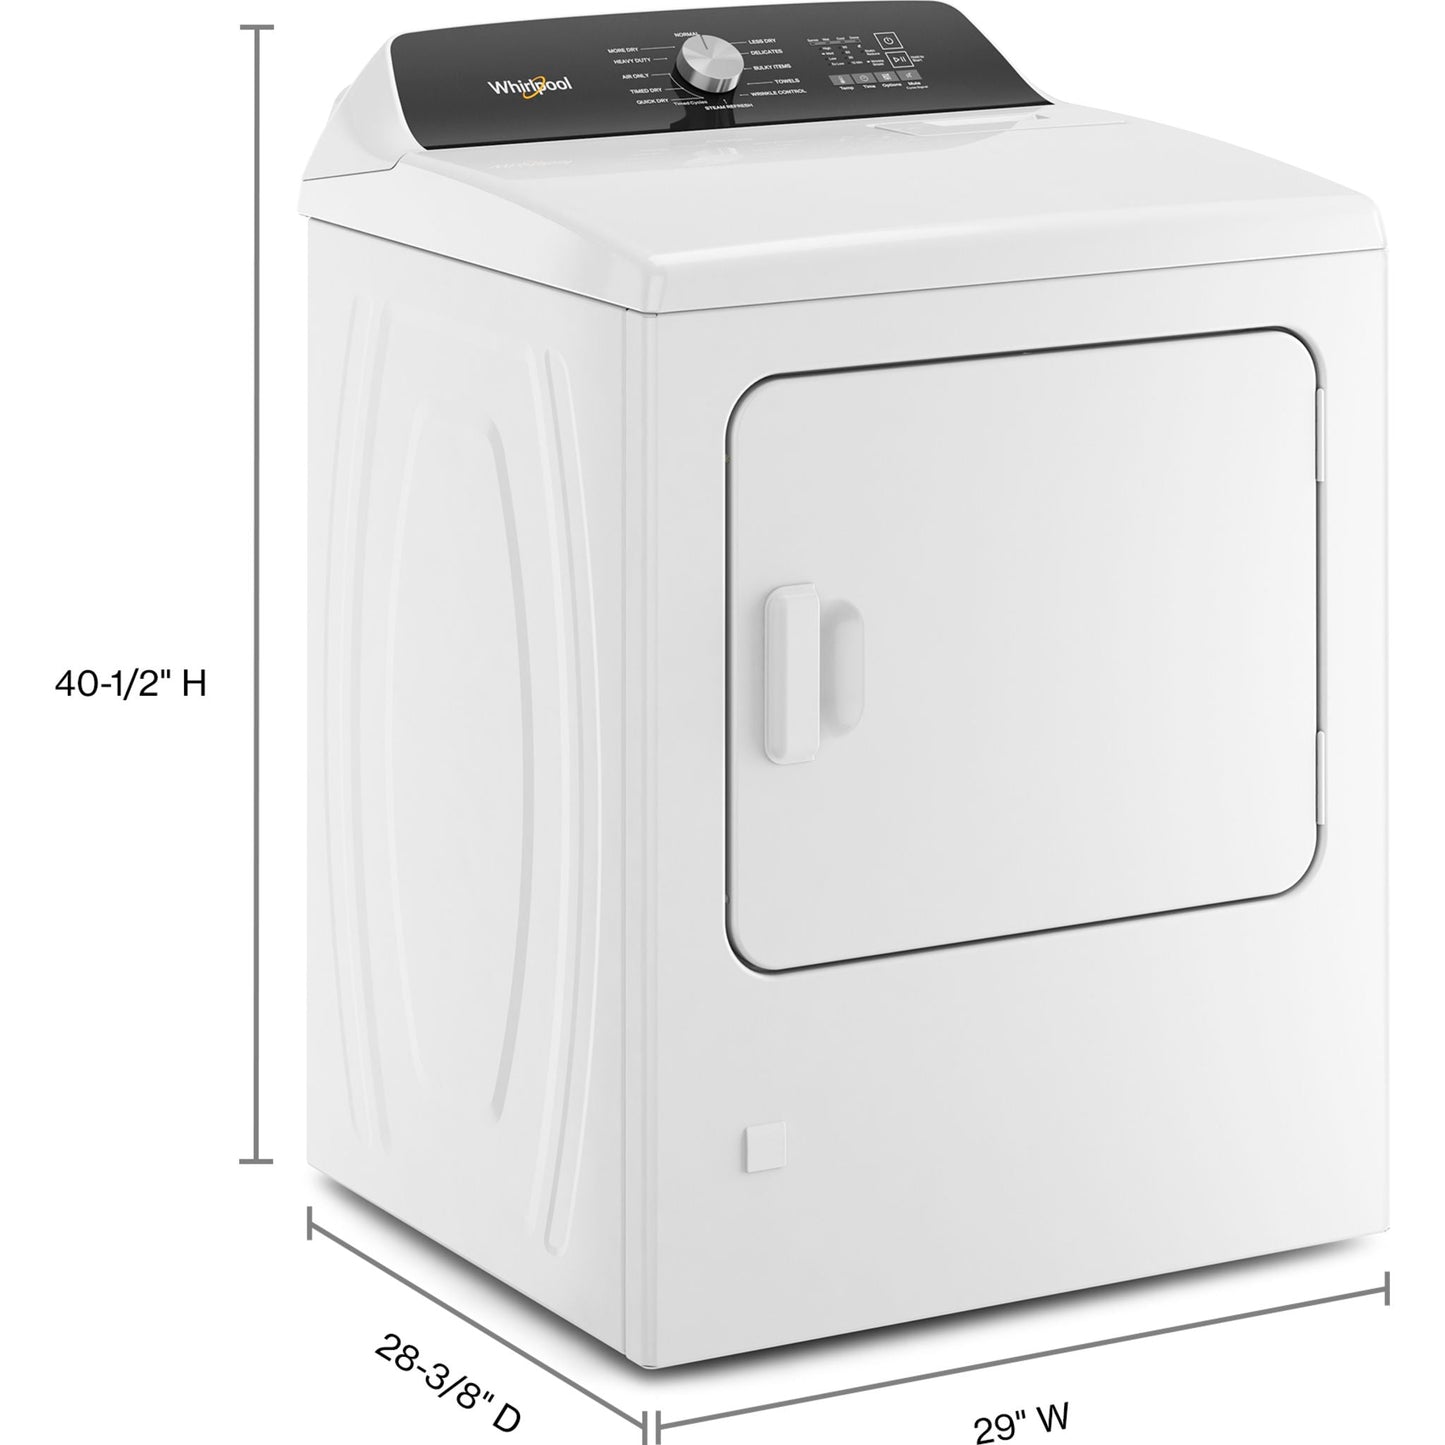 Whirlpool Dryer (WGD5050LW) - White